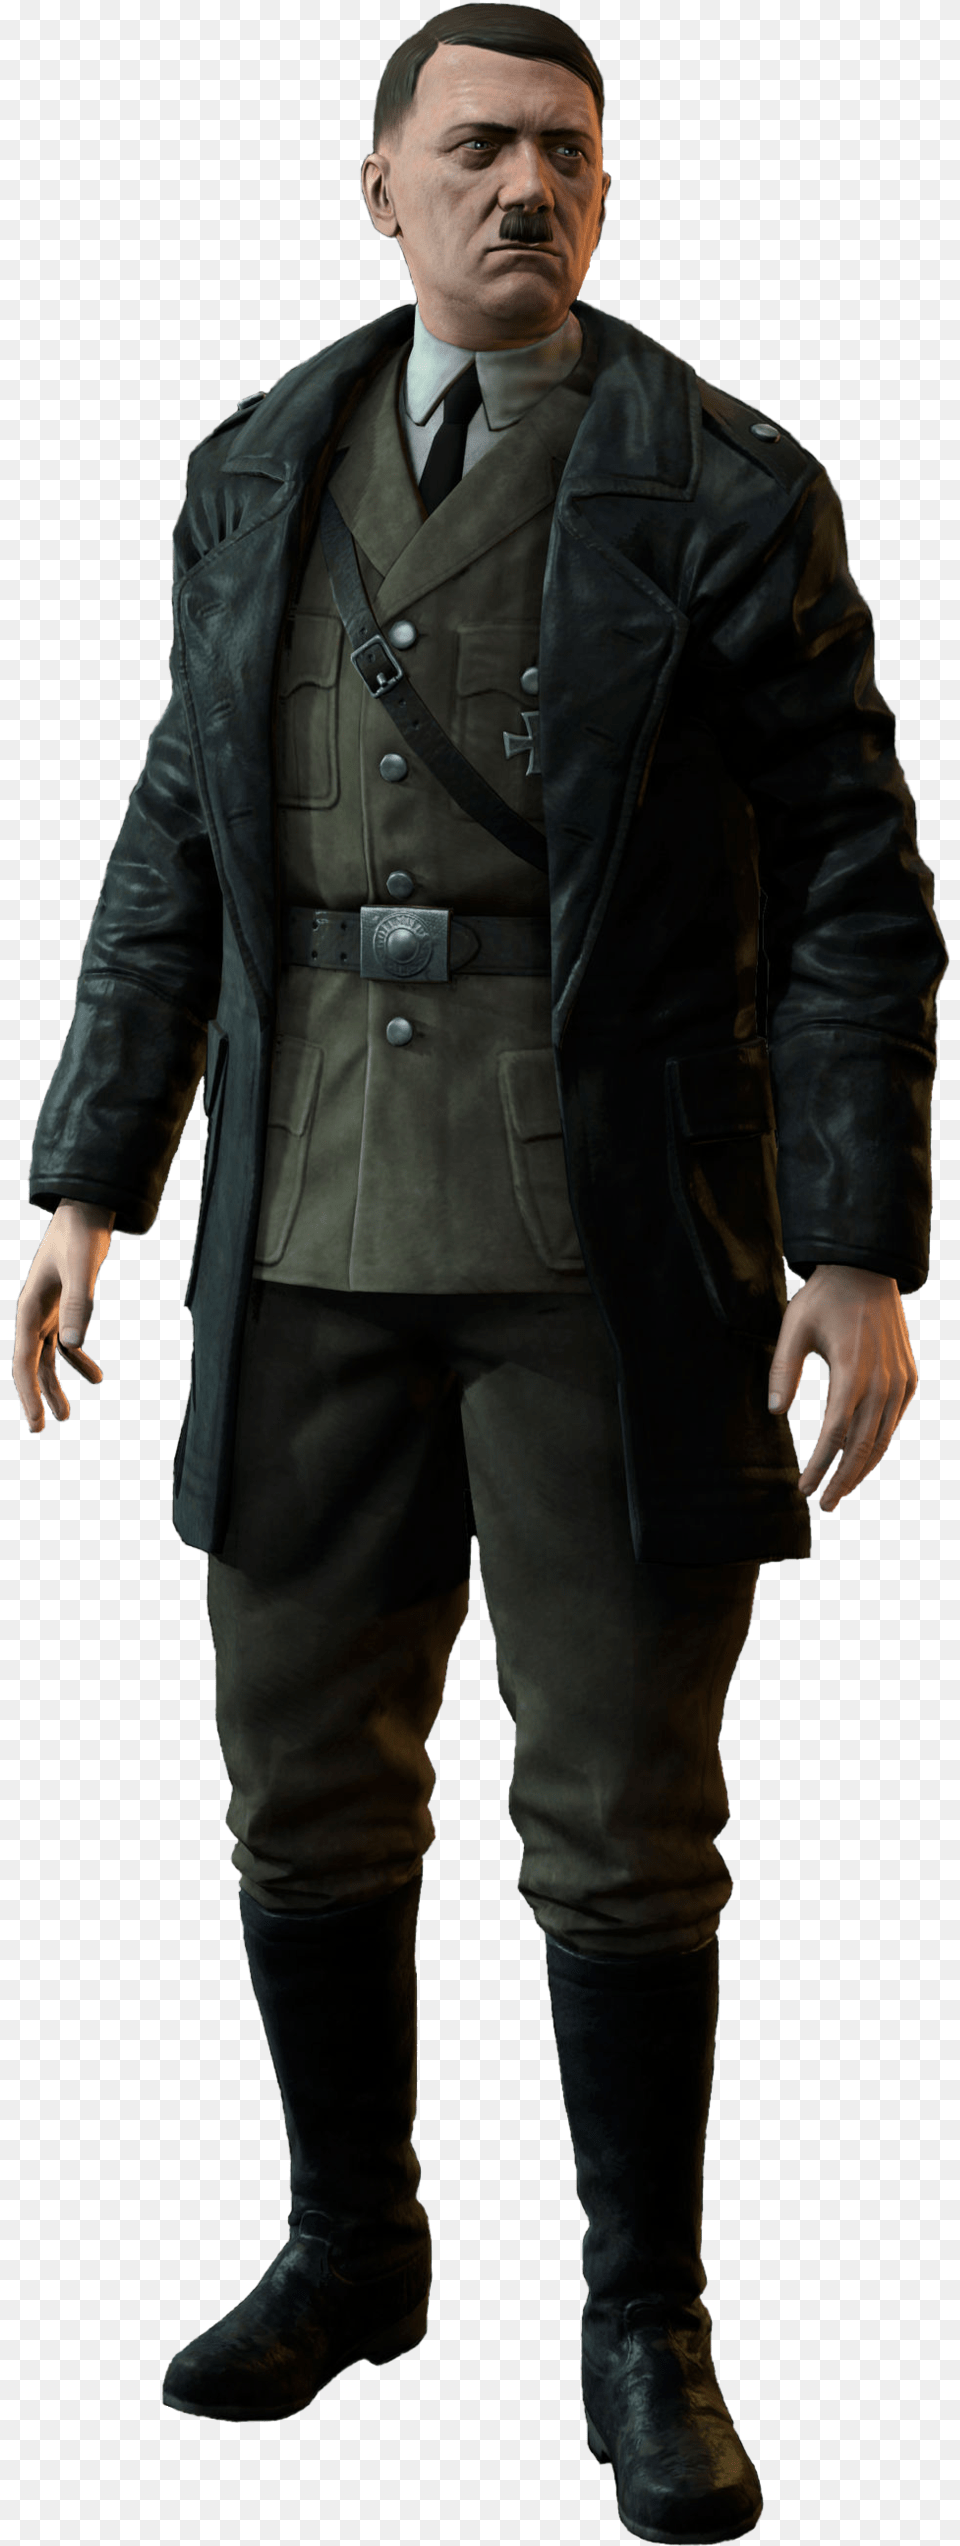 Hitler Pic 505 Games Sniper Elite Iii Xbox One, Clothing, Coat, Jacket, Man Png